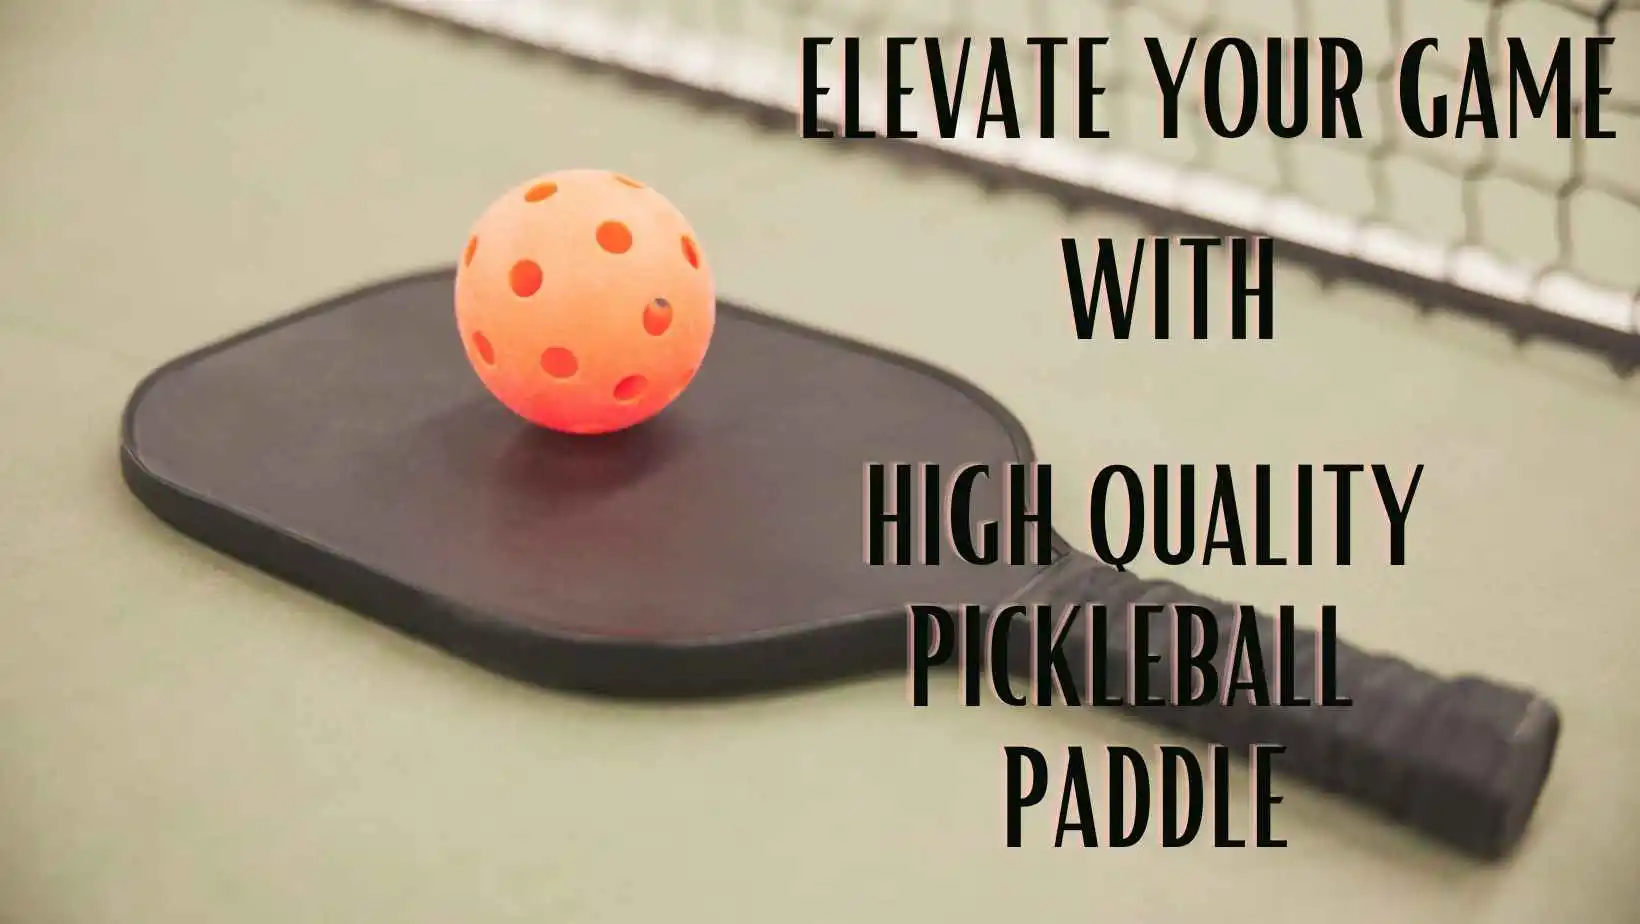 High Quality Pickleball Paddle